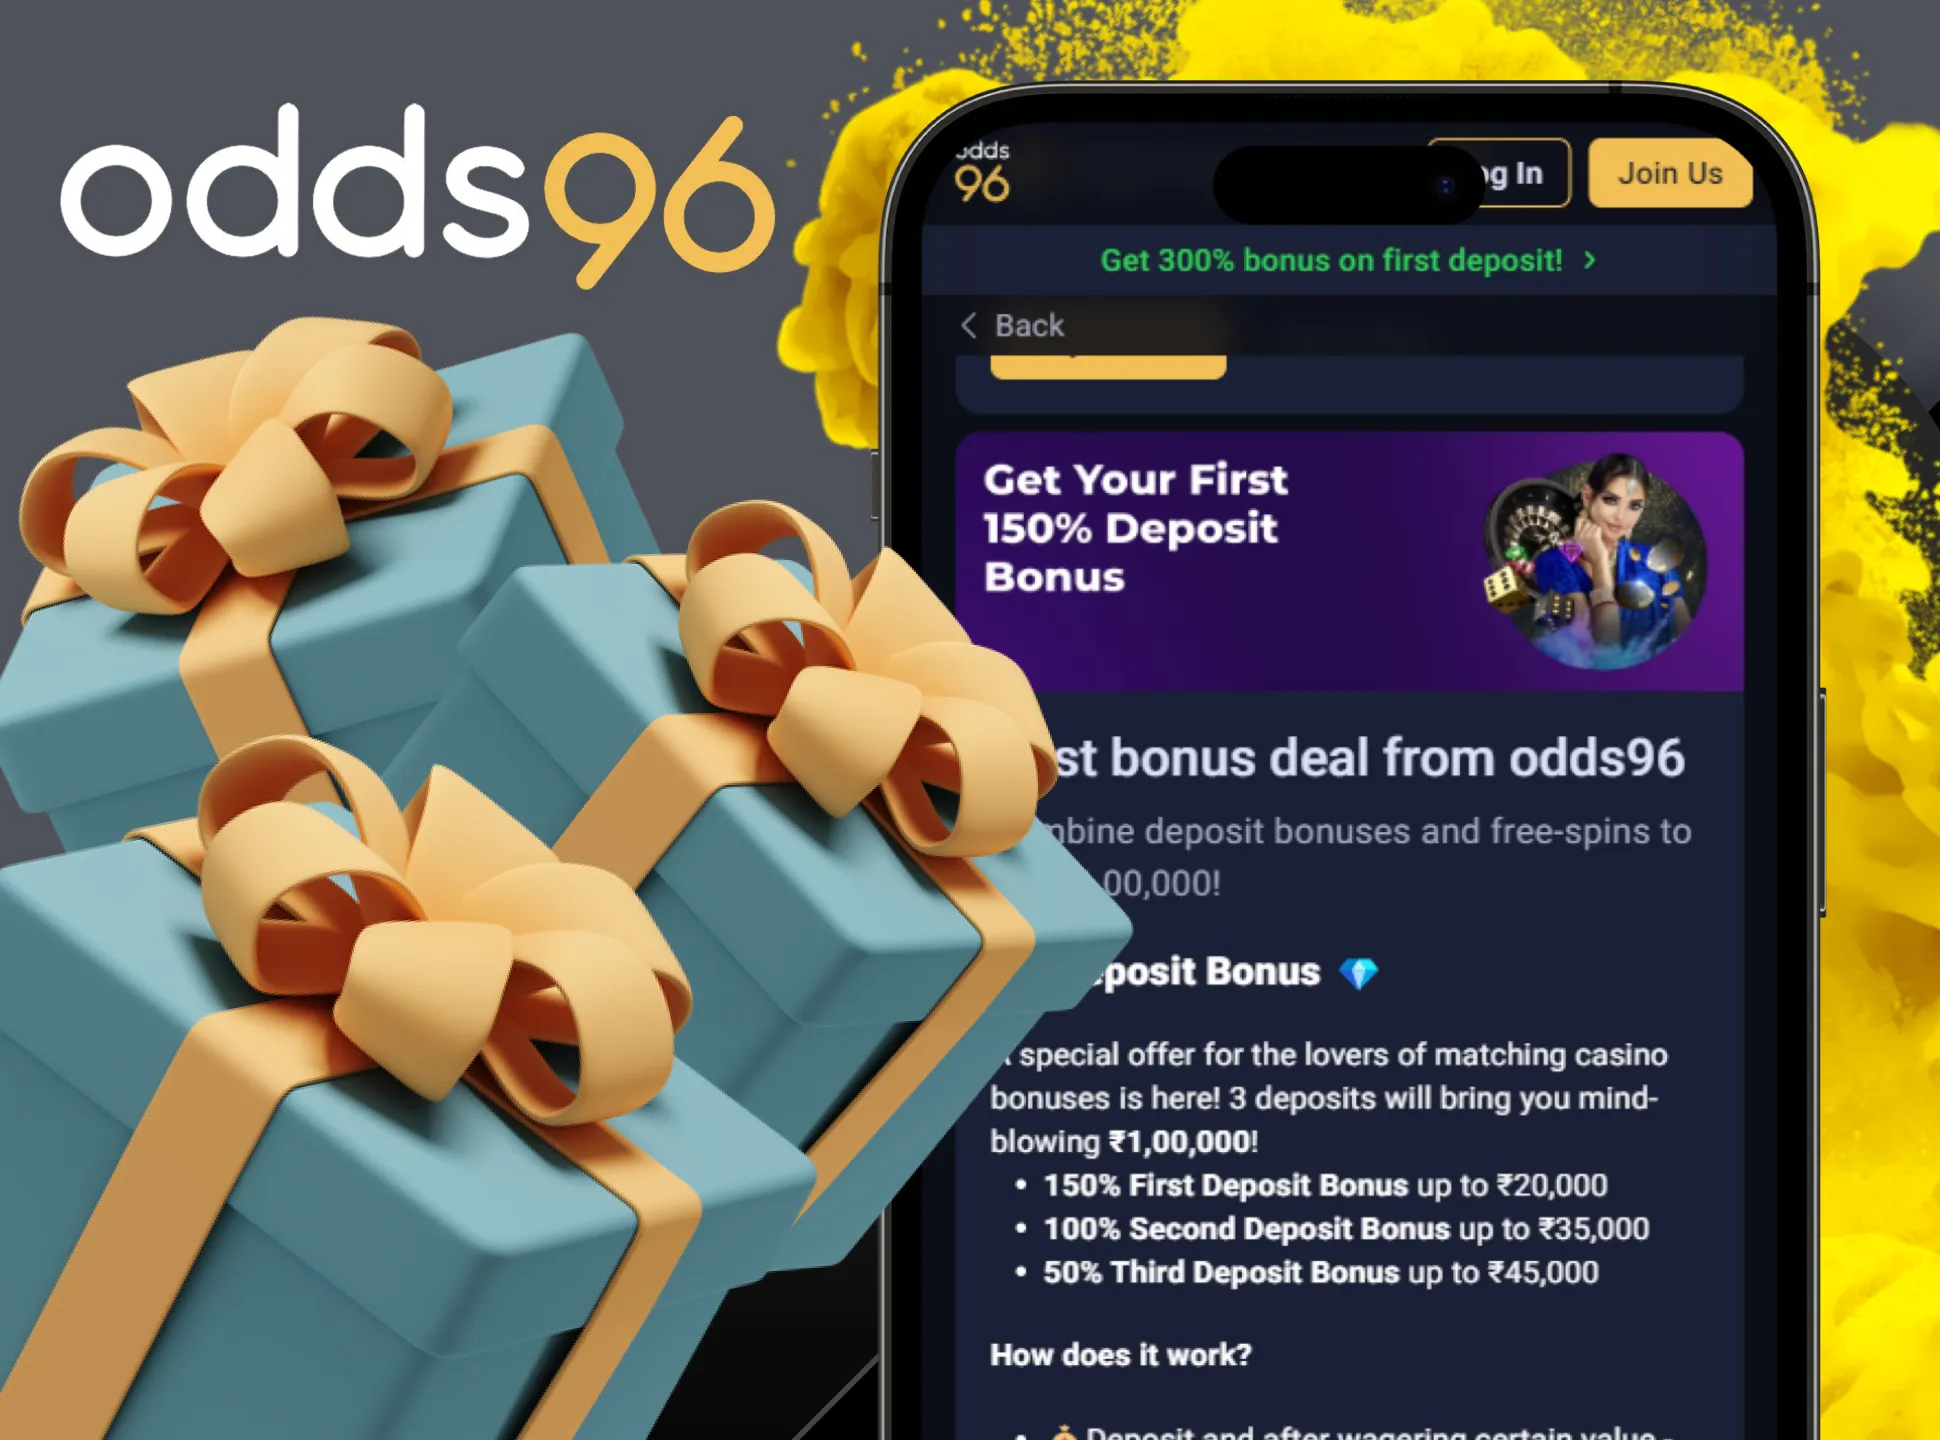 Get your Odds96 welcome bonus in app after first deposit.